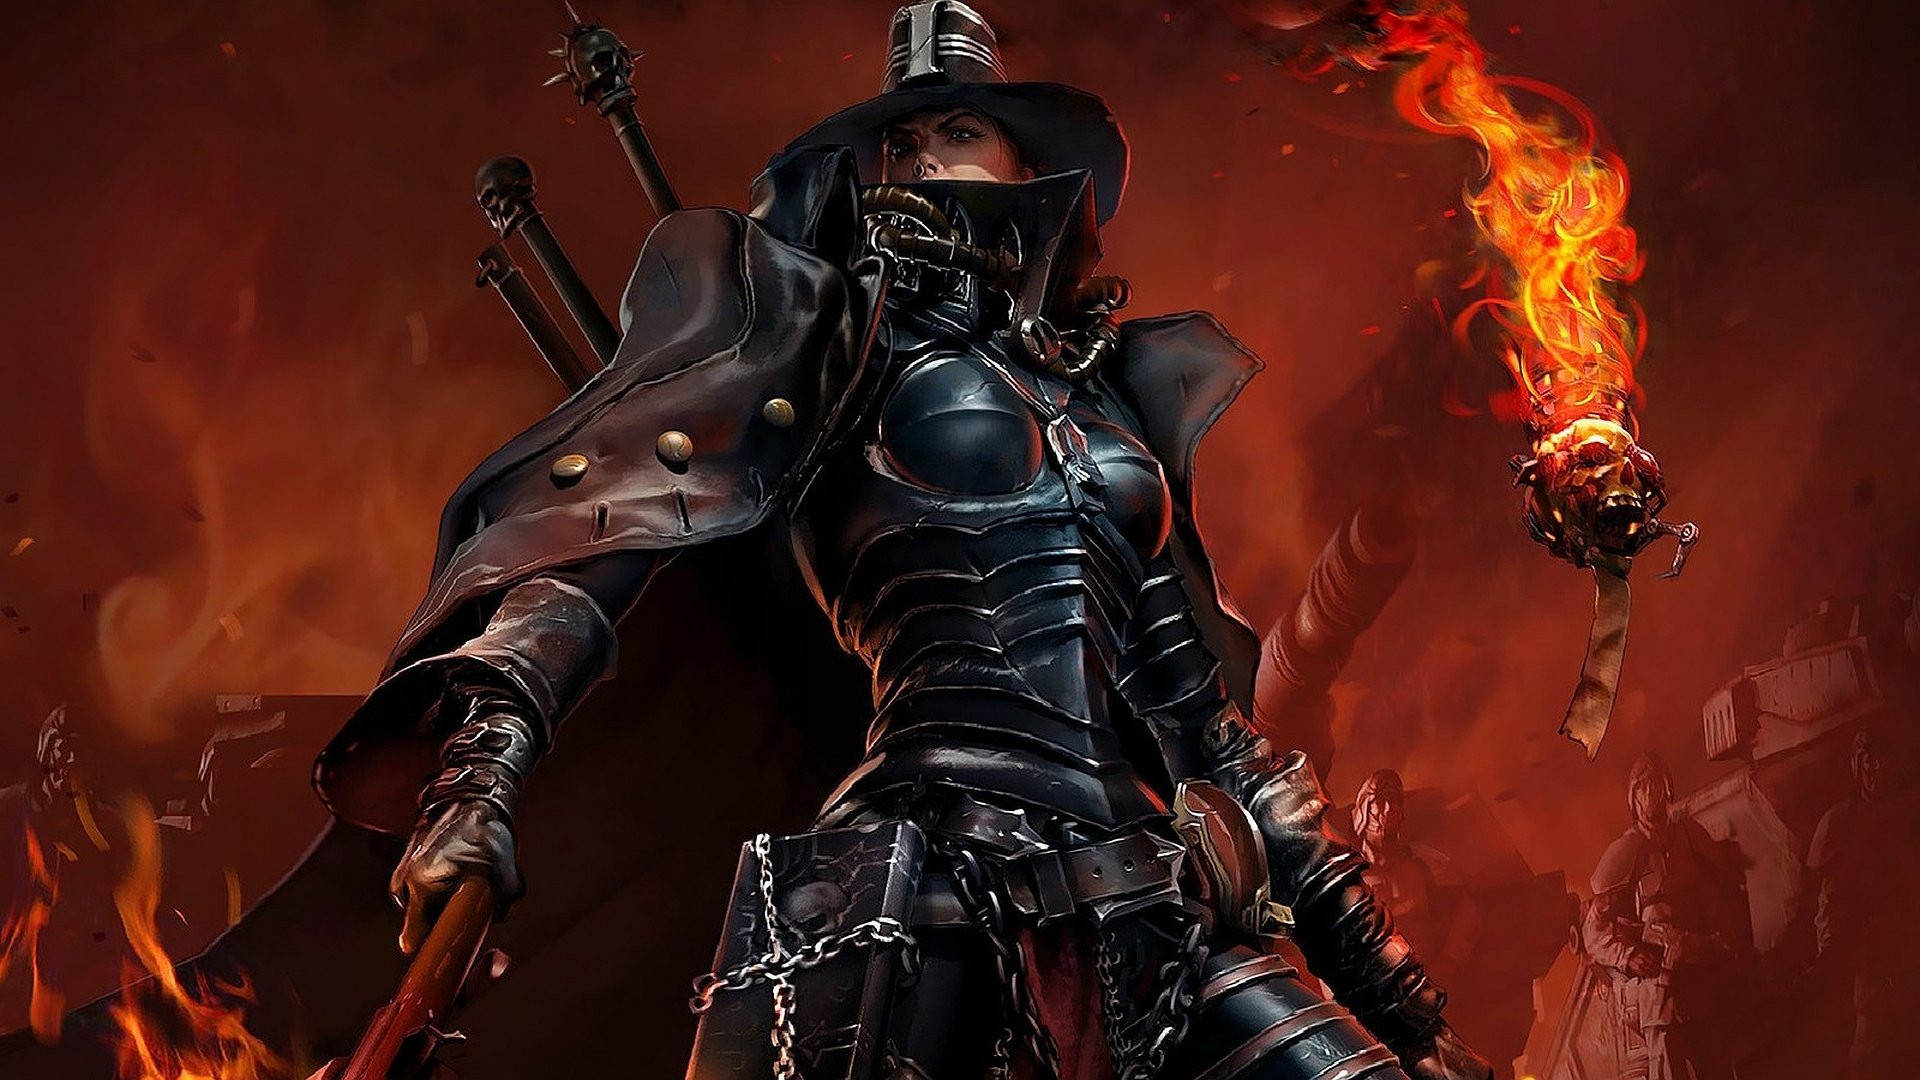 download warhammer chaosbane witch hunter